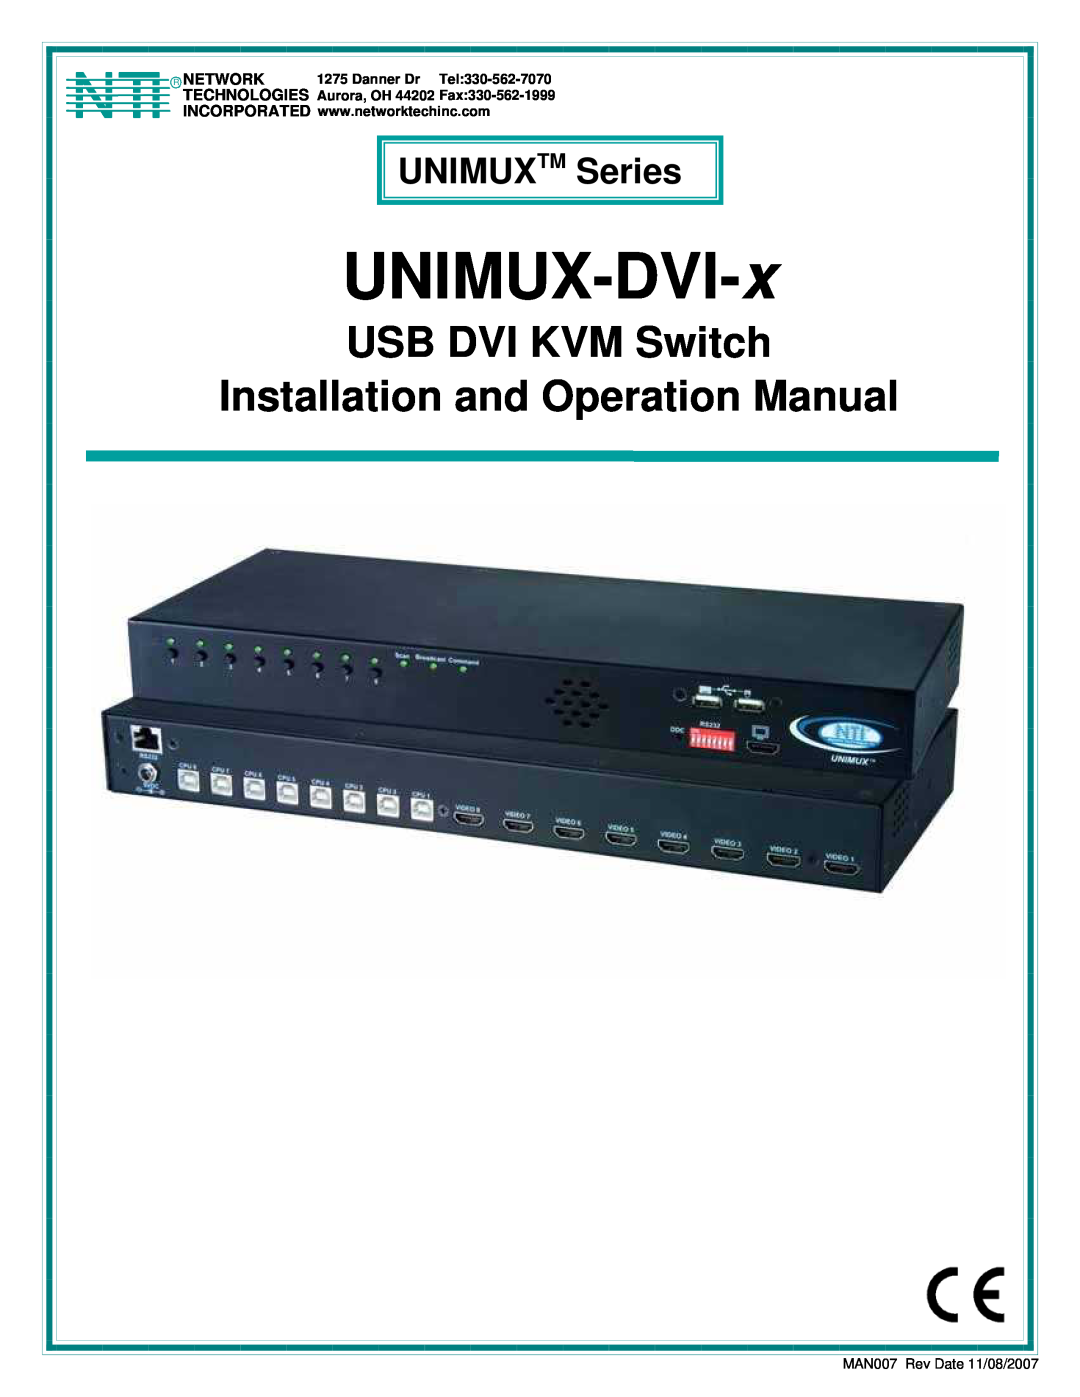 Network Technologies operation manual UNIMUXTM Series, UNIMUX-DVI-x, USB DVI KVM Switch, Danner Dr Tel330-562-7070 